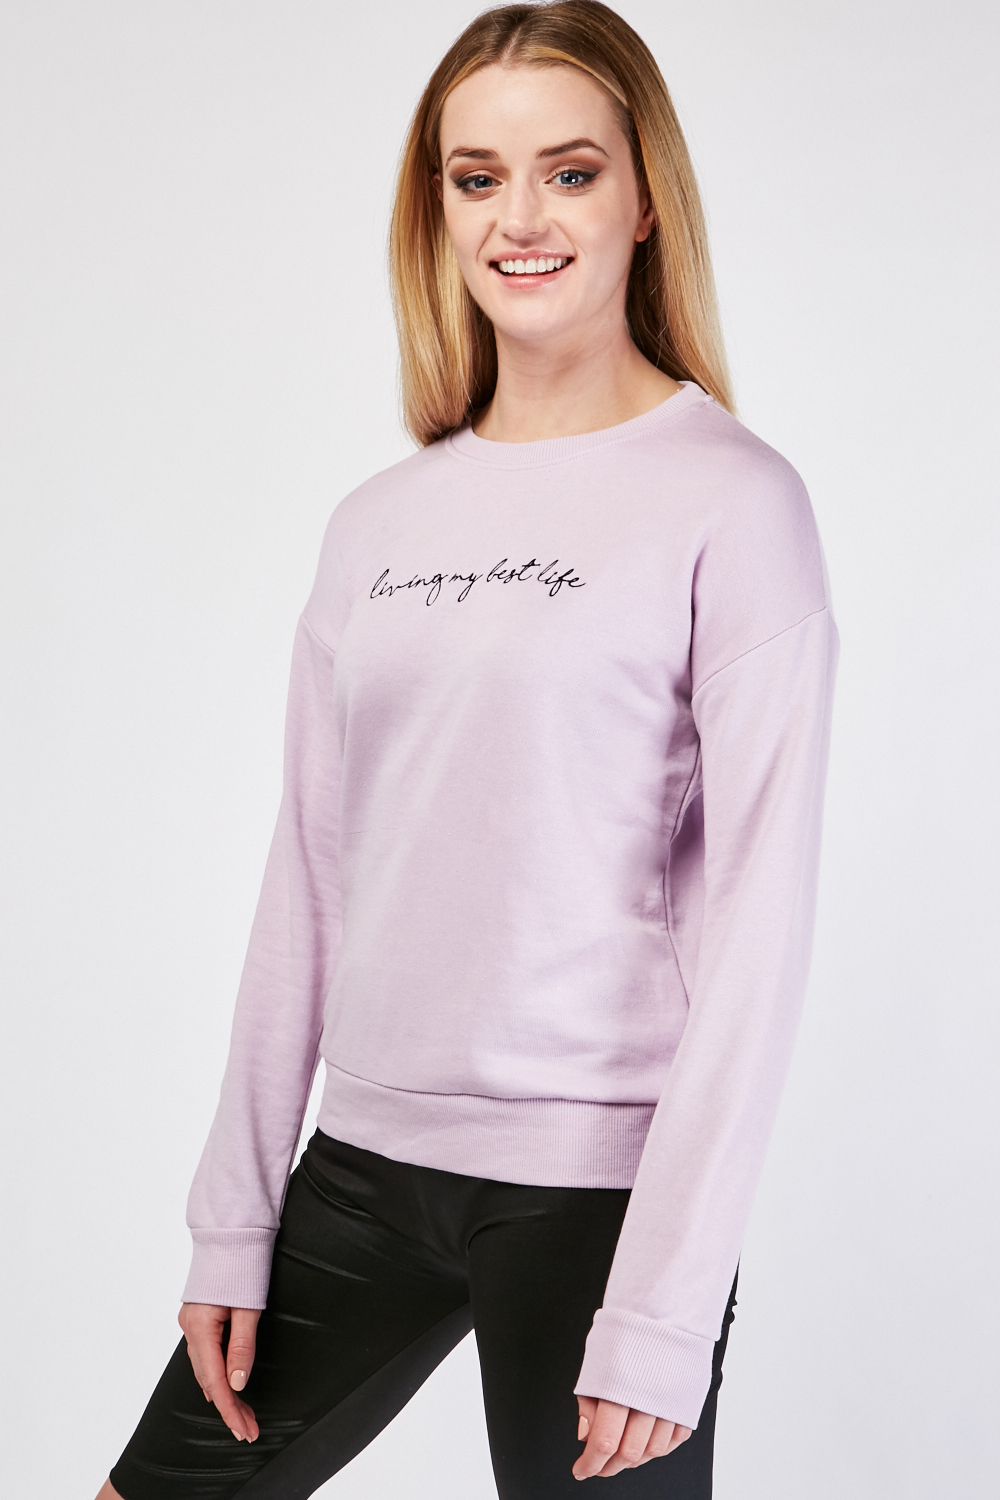 Living My Best Life Sweatshirt - Just $7